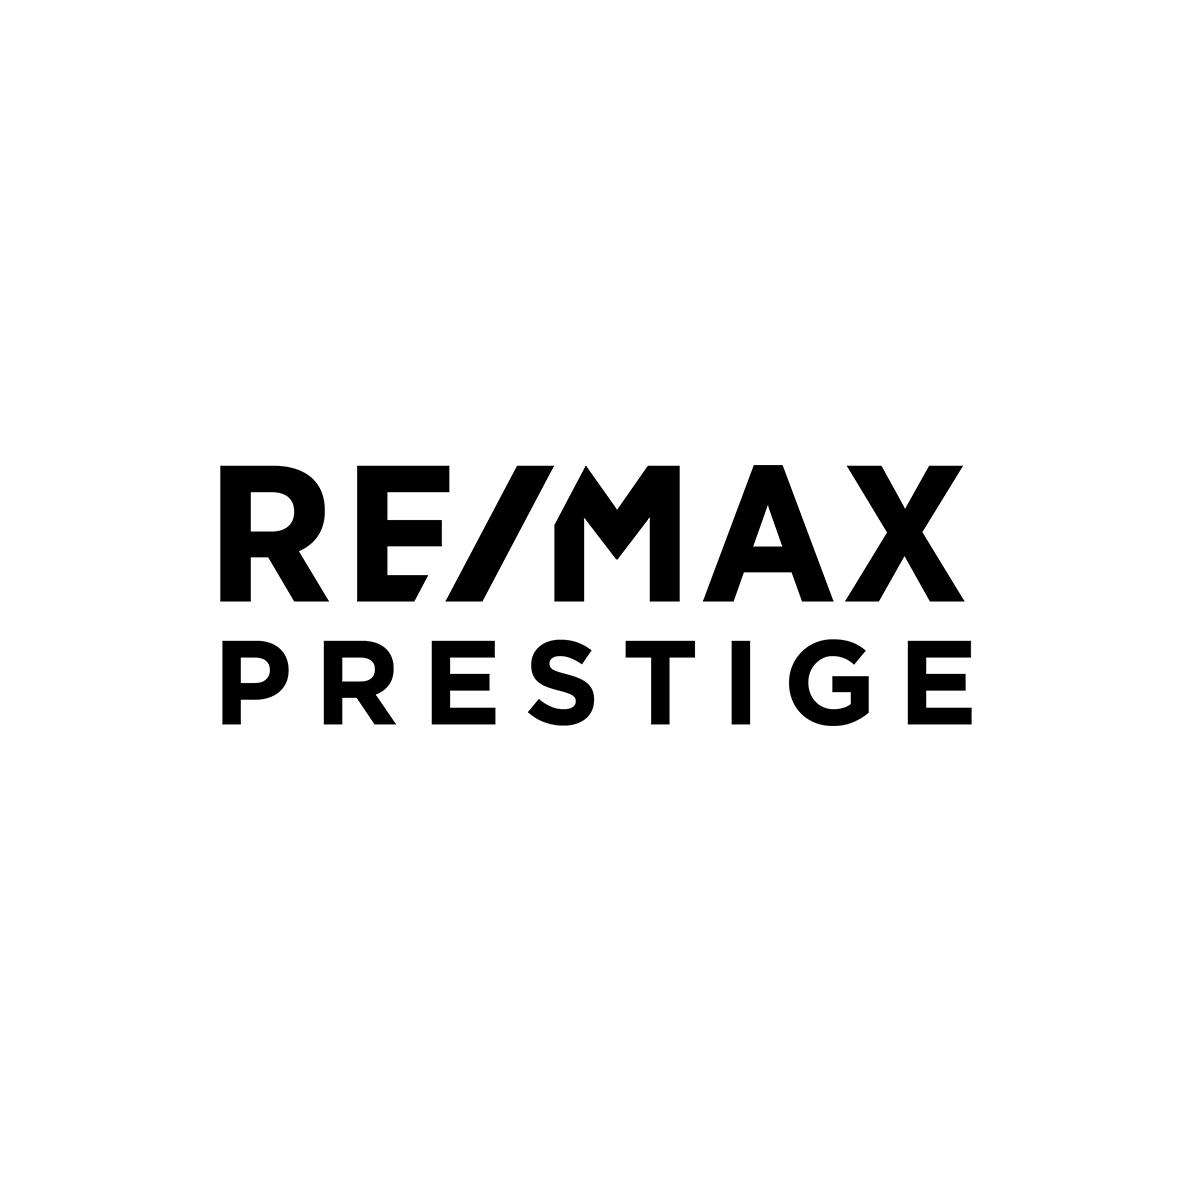 Remax Prestige.png